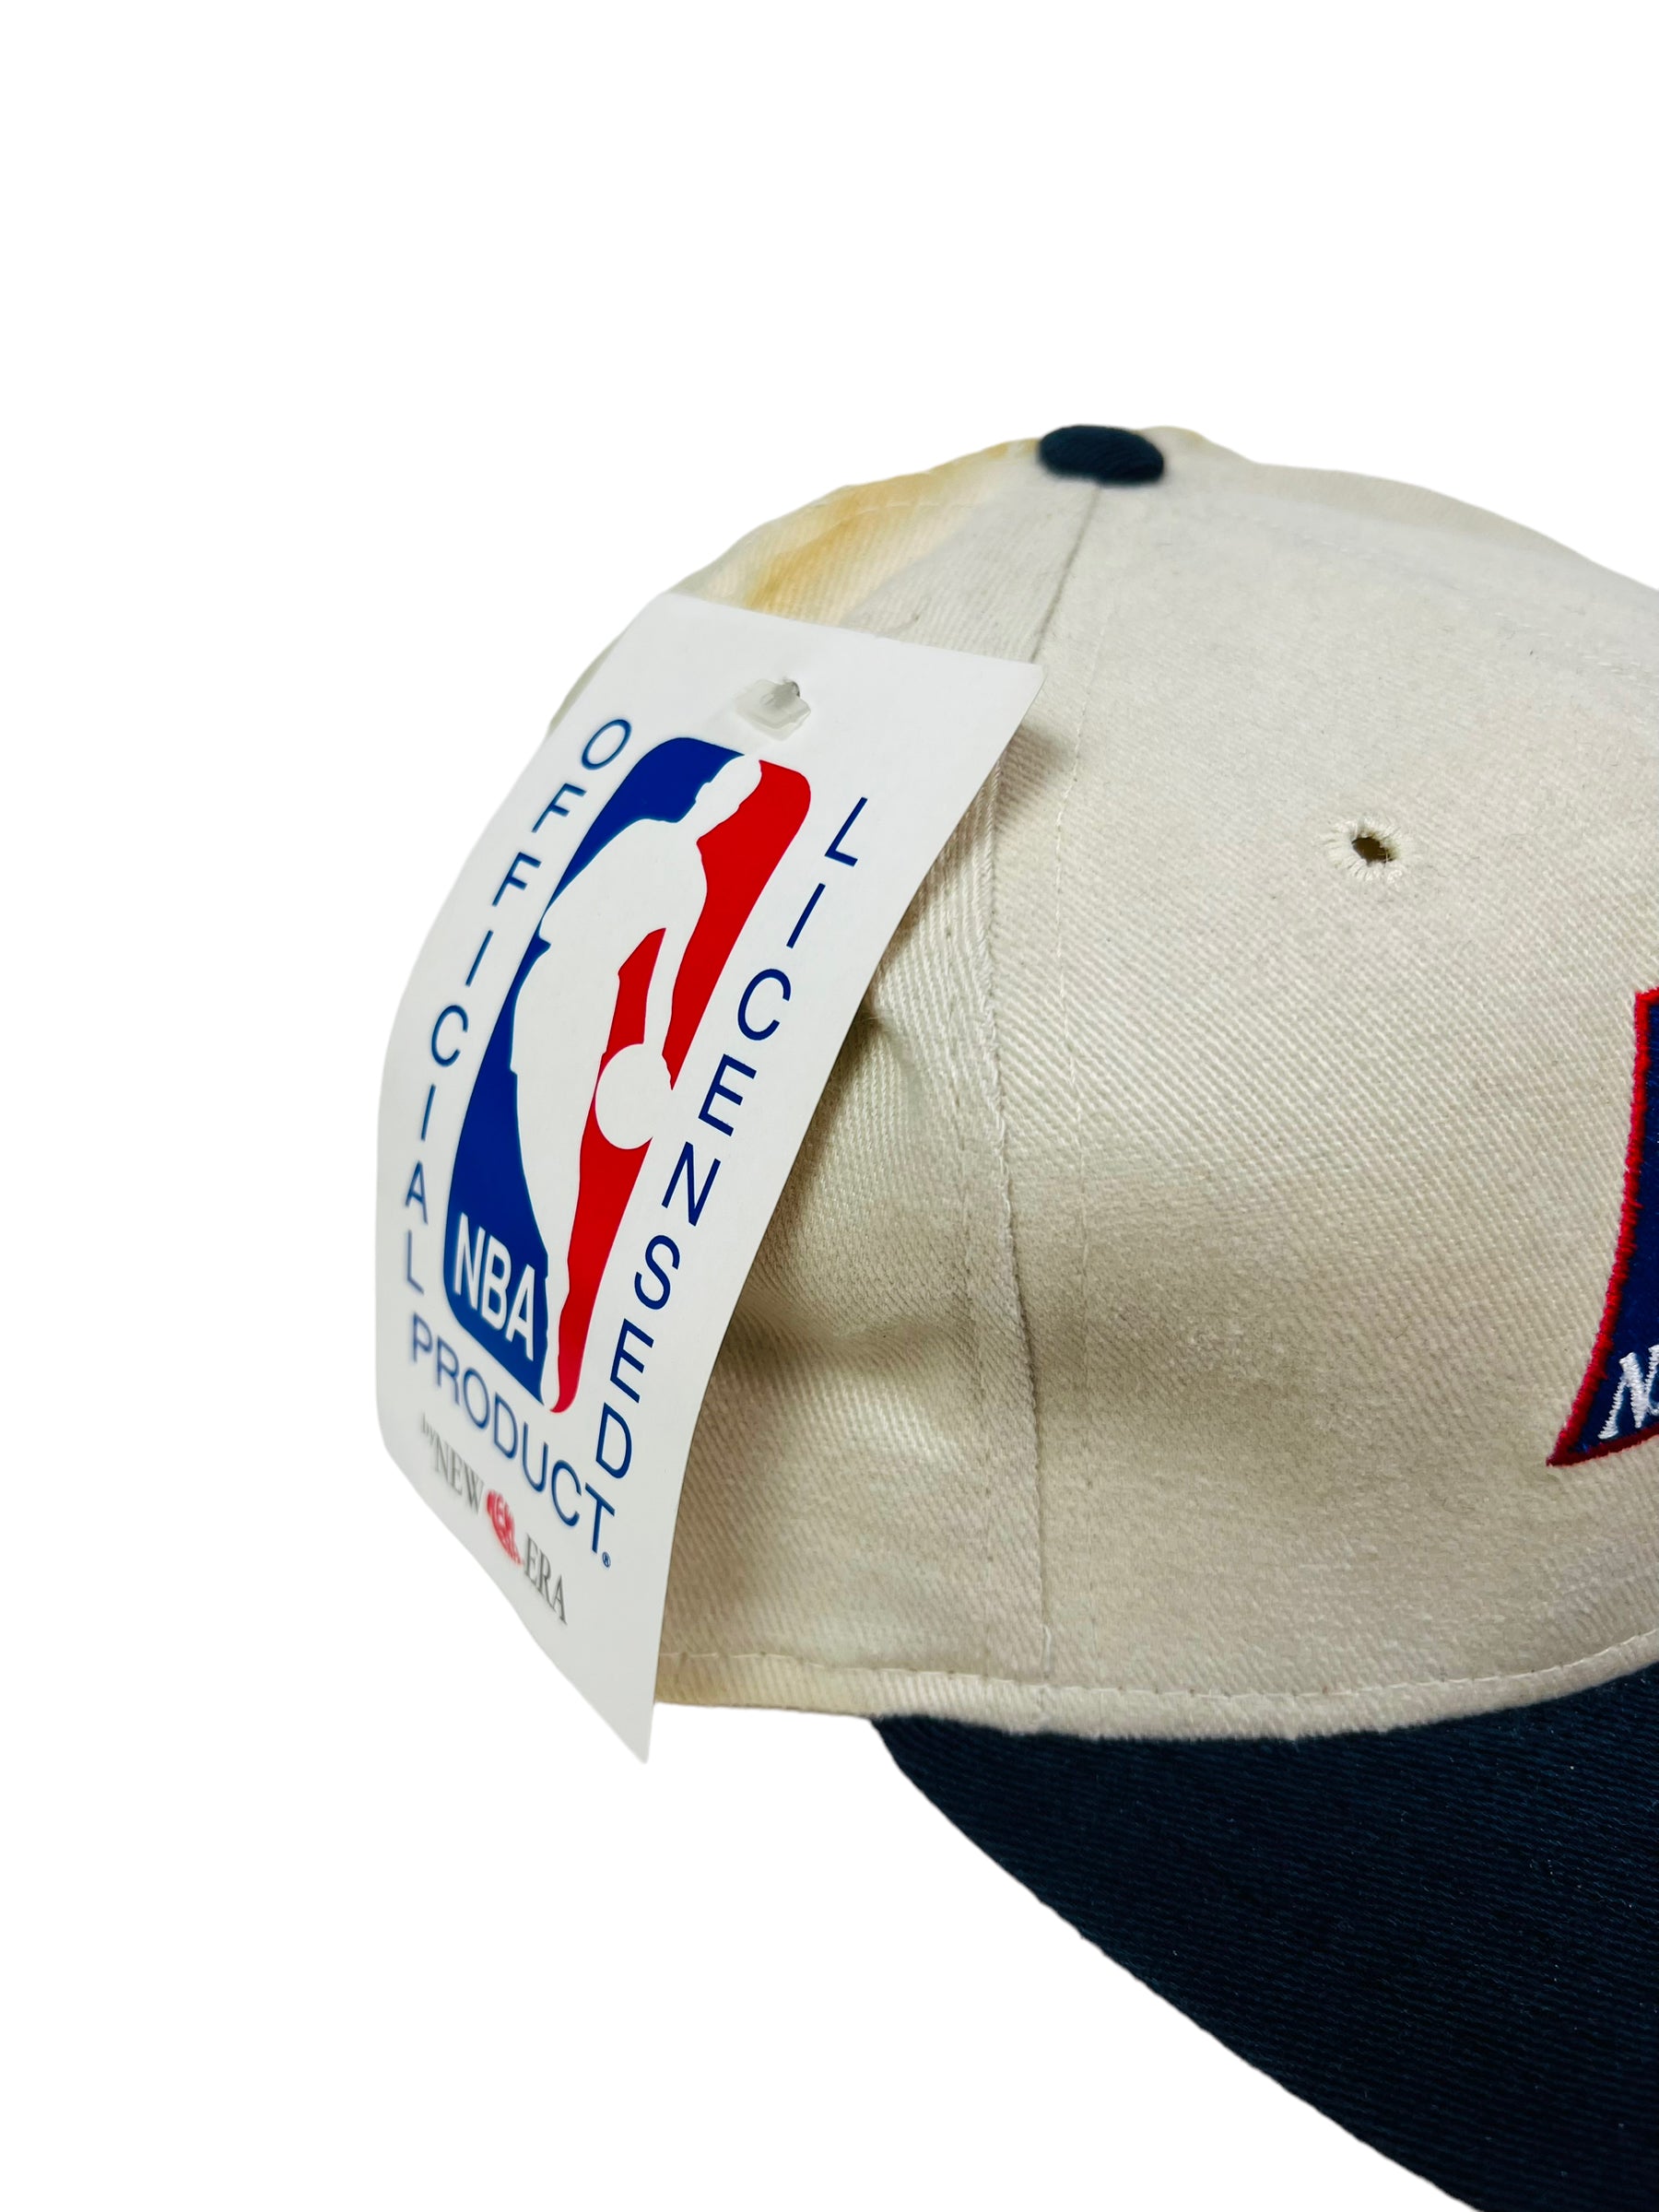 DENVER NUGGETS VINTAGE 2000'S AMERICAN NEEDLE STRAPBACK ADULT HAT - Bucks  County Baseball Co.